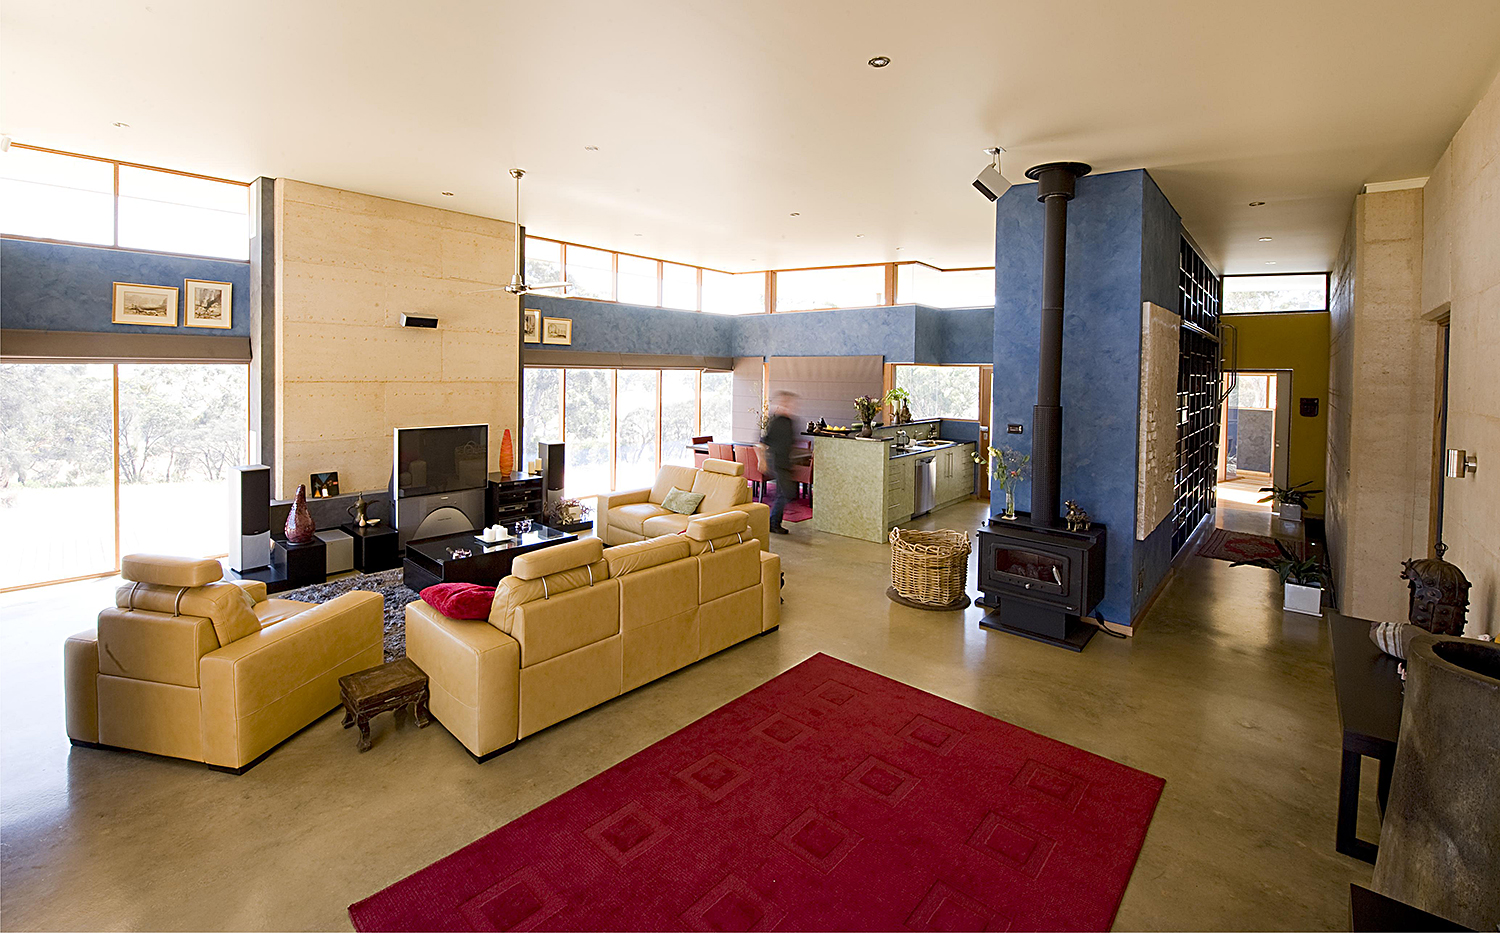 Birdwood Art House - A contemporary architecturally designed home - interior